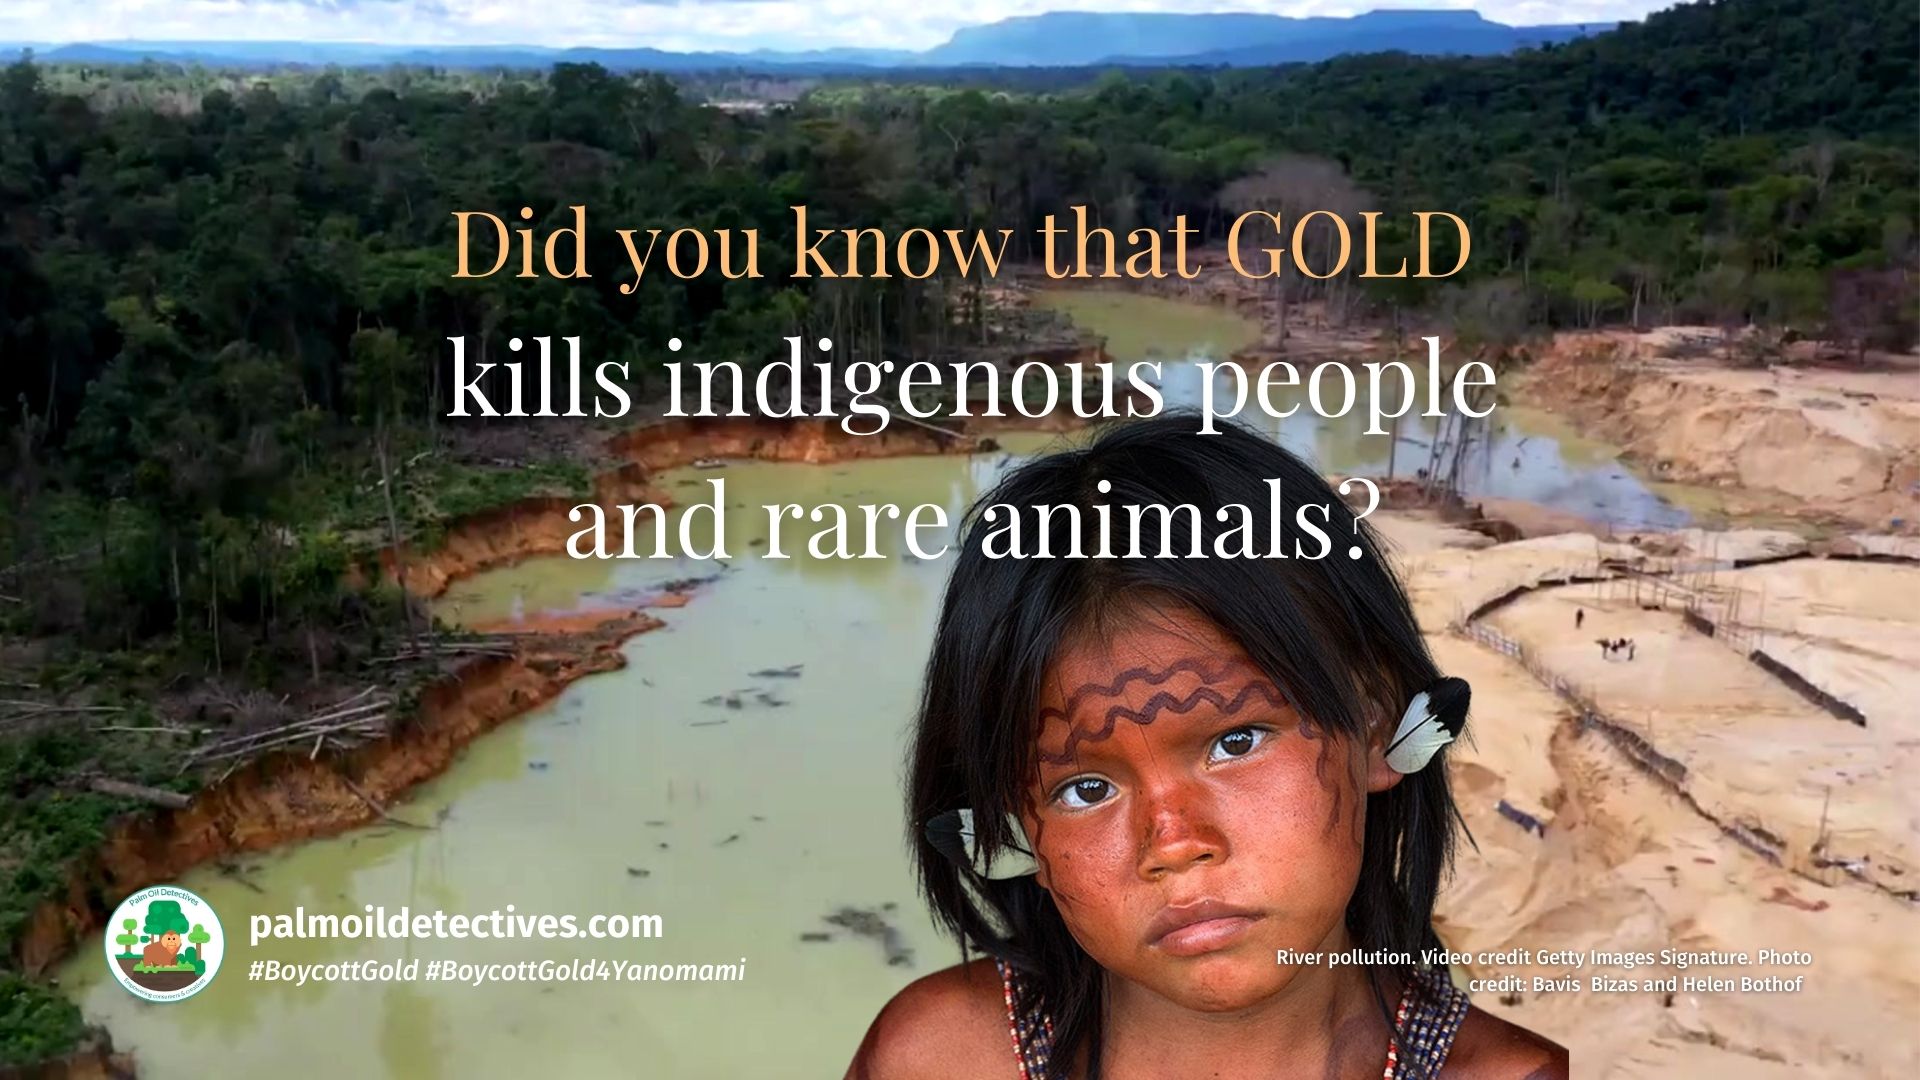 Gold mining in the Amazon devastates the Yanomami 1